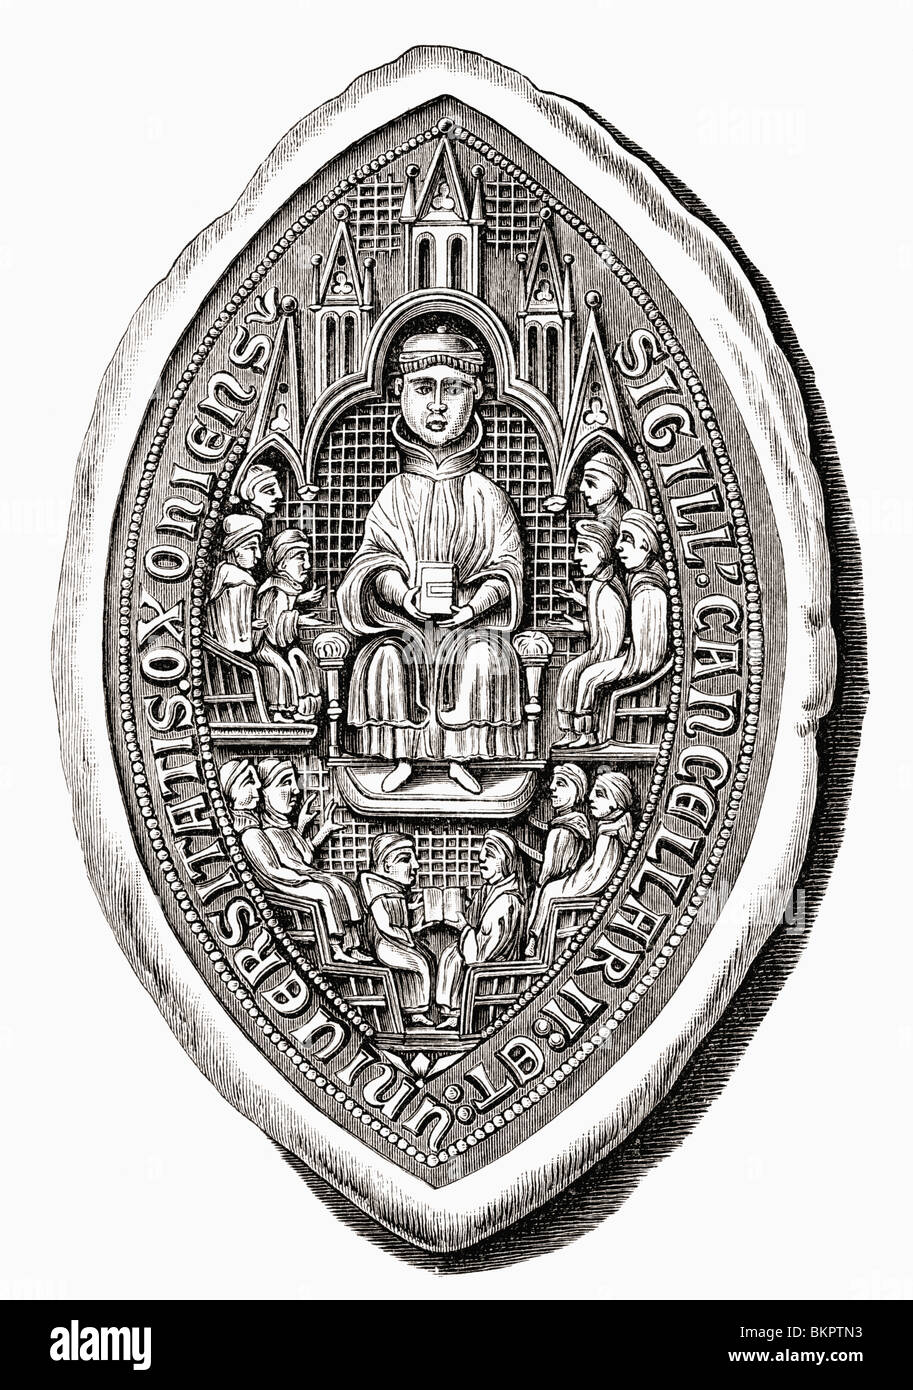 Seal of Oxford university c.1300. Stock Photo